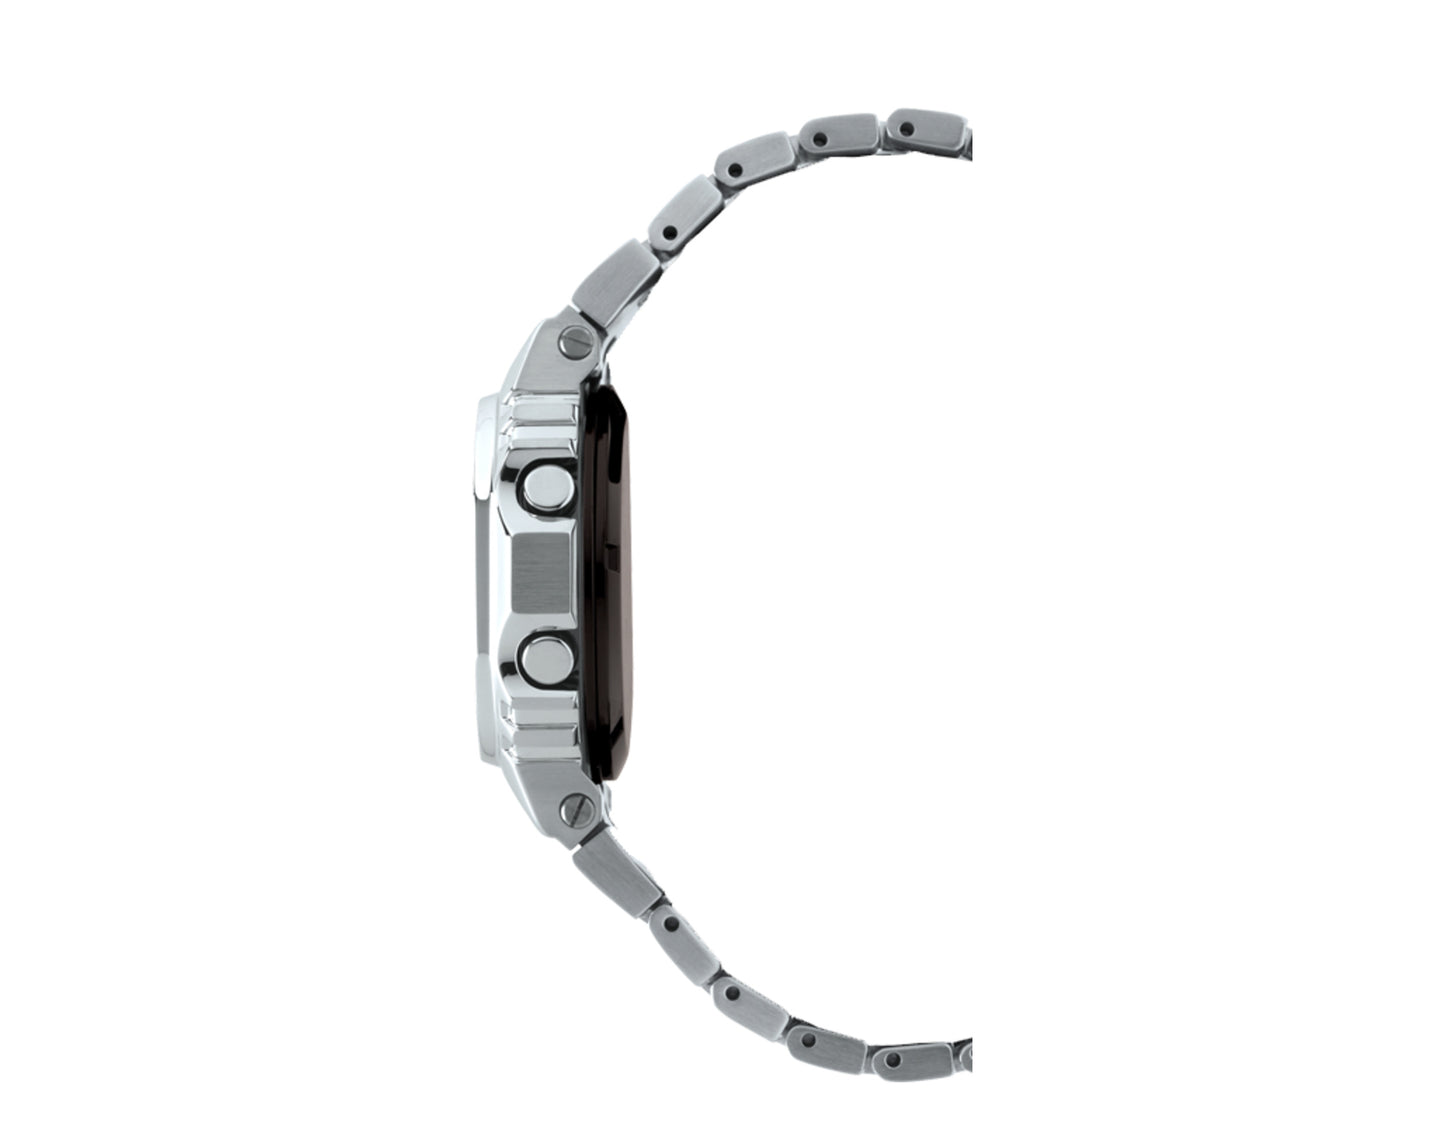 Casio G-Shock Digital Full Metal Silver Men's Watch GMWB5000D-1